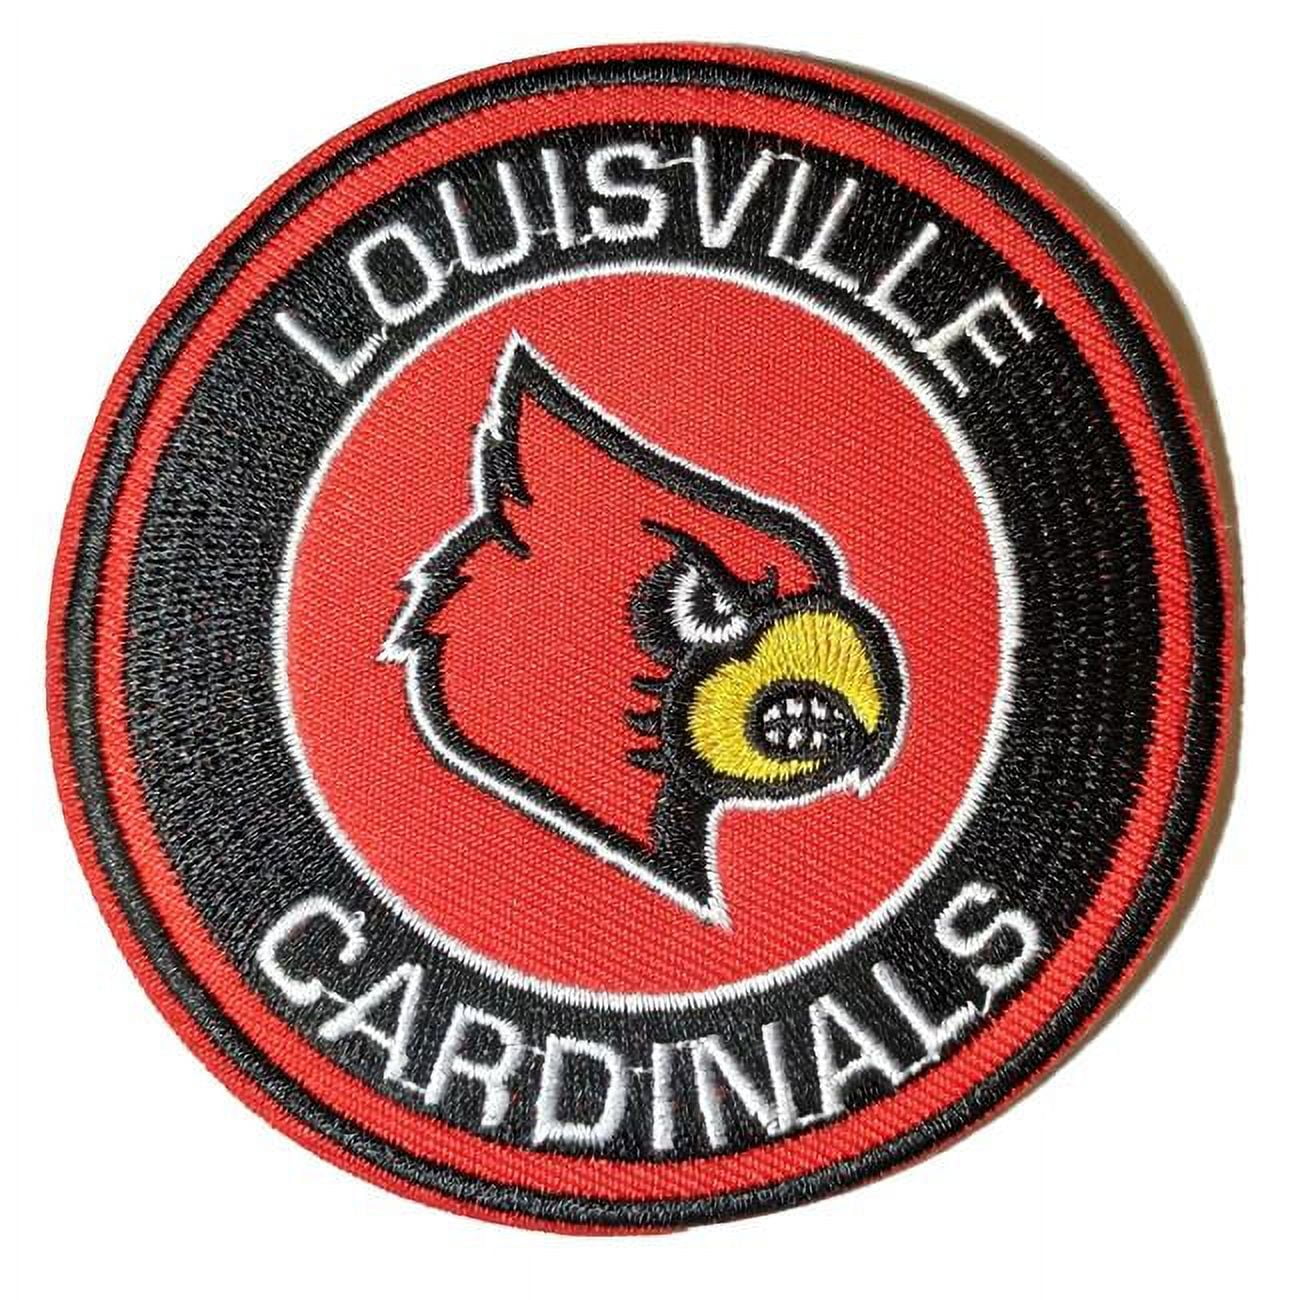 University of Louisville Cardinals Yard Card